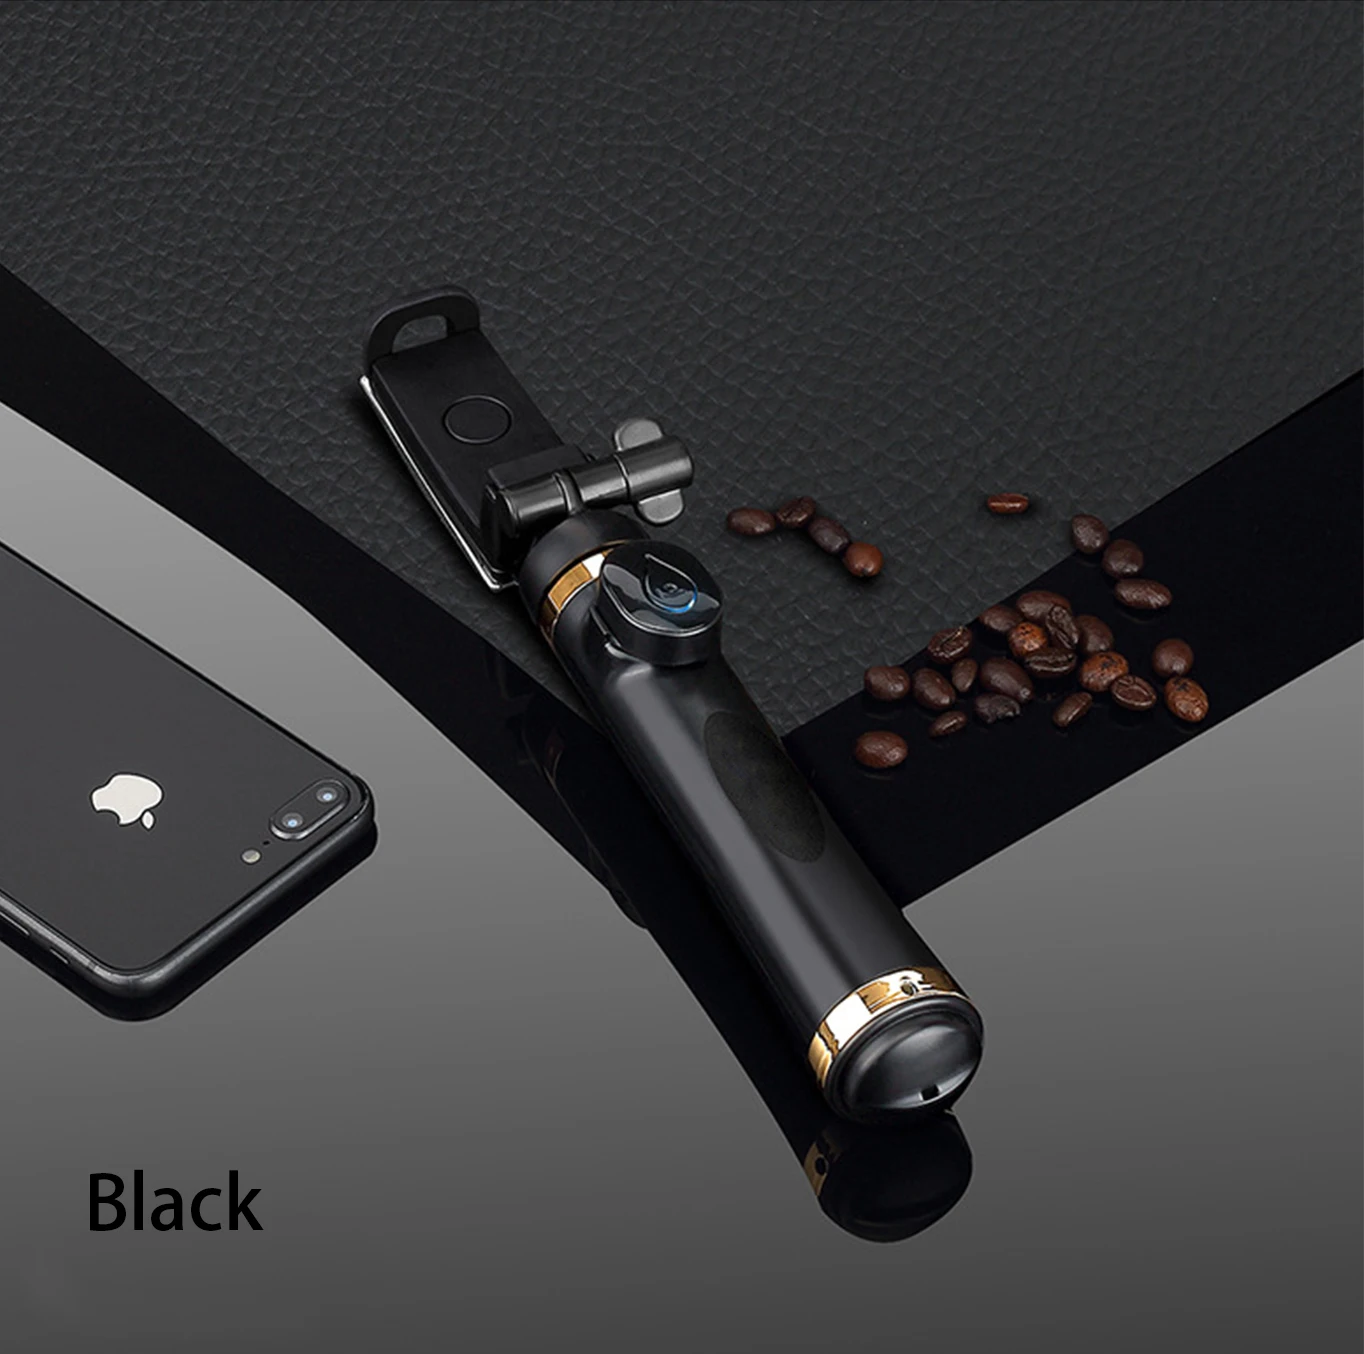 

Amazon Hot Sale Mini Extendable Monopod Universal paracord Selfie Stick Tripod For Smartphone